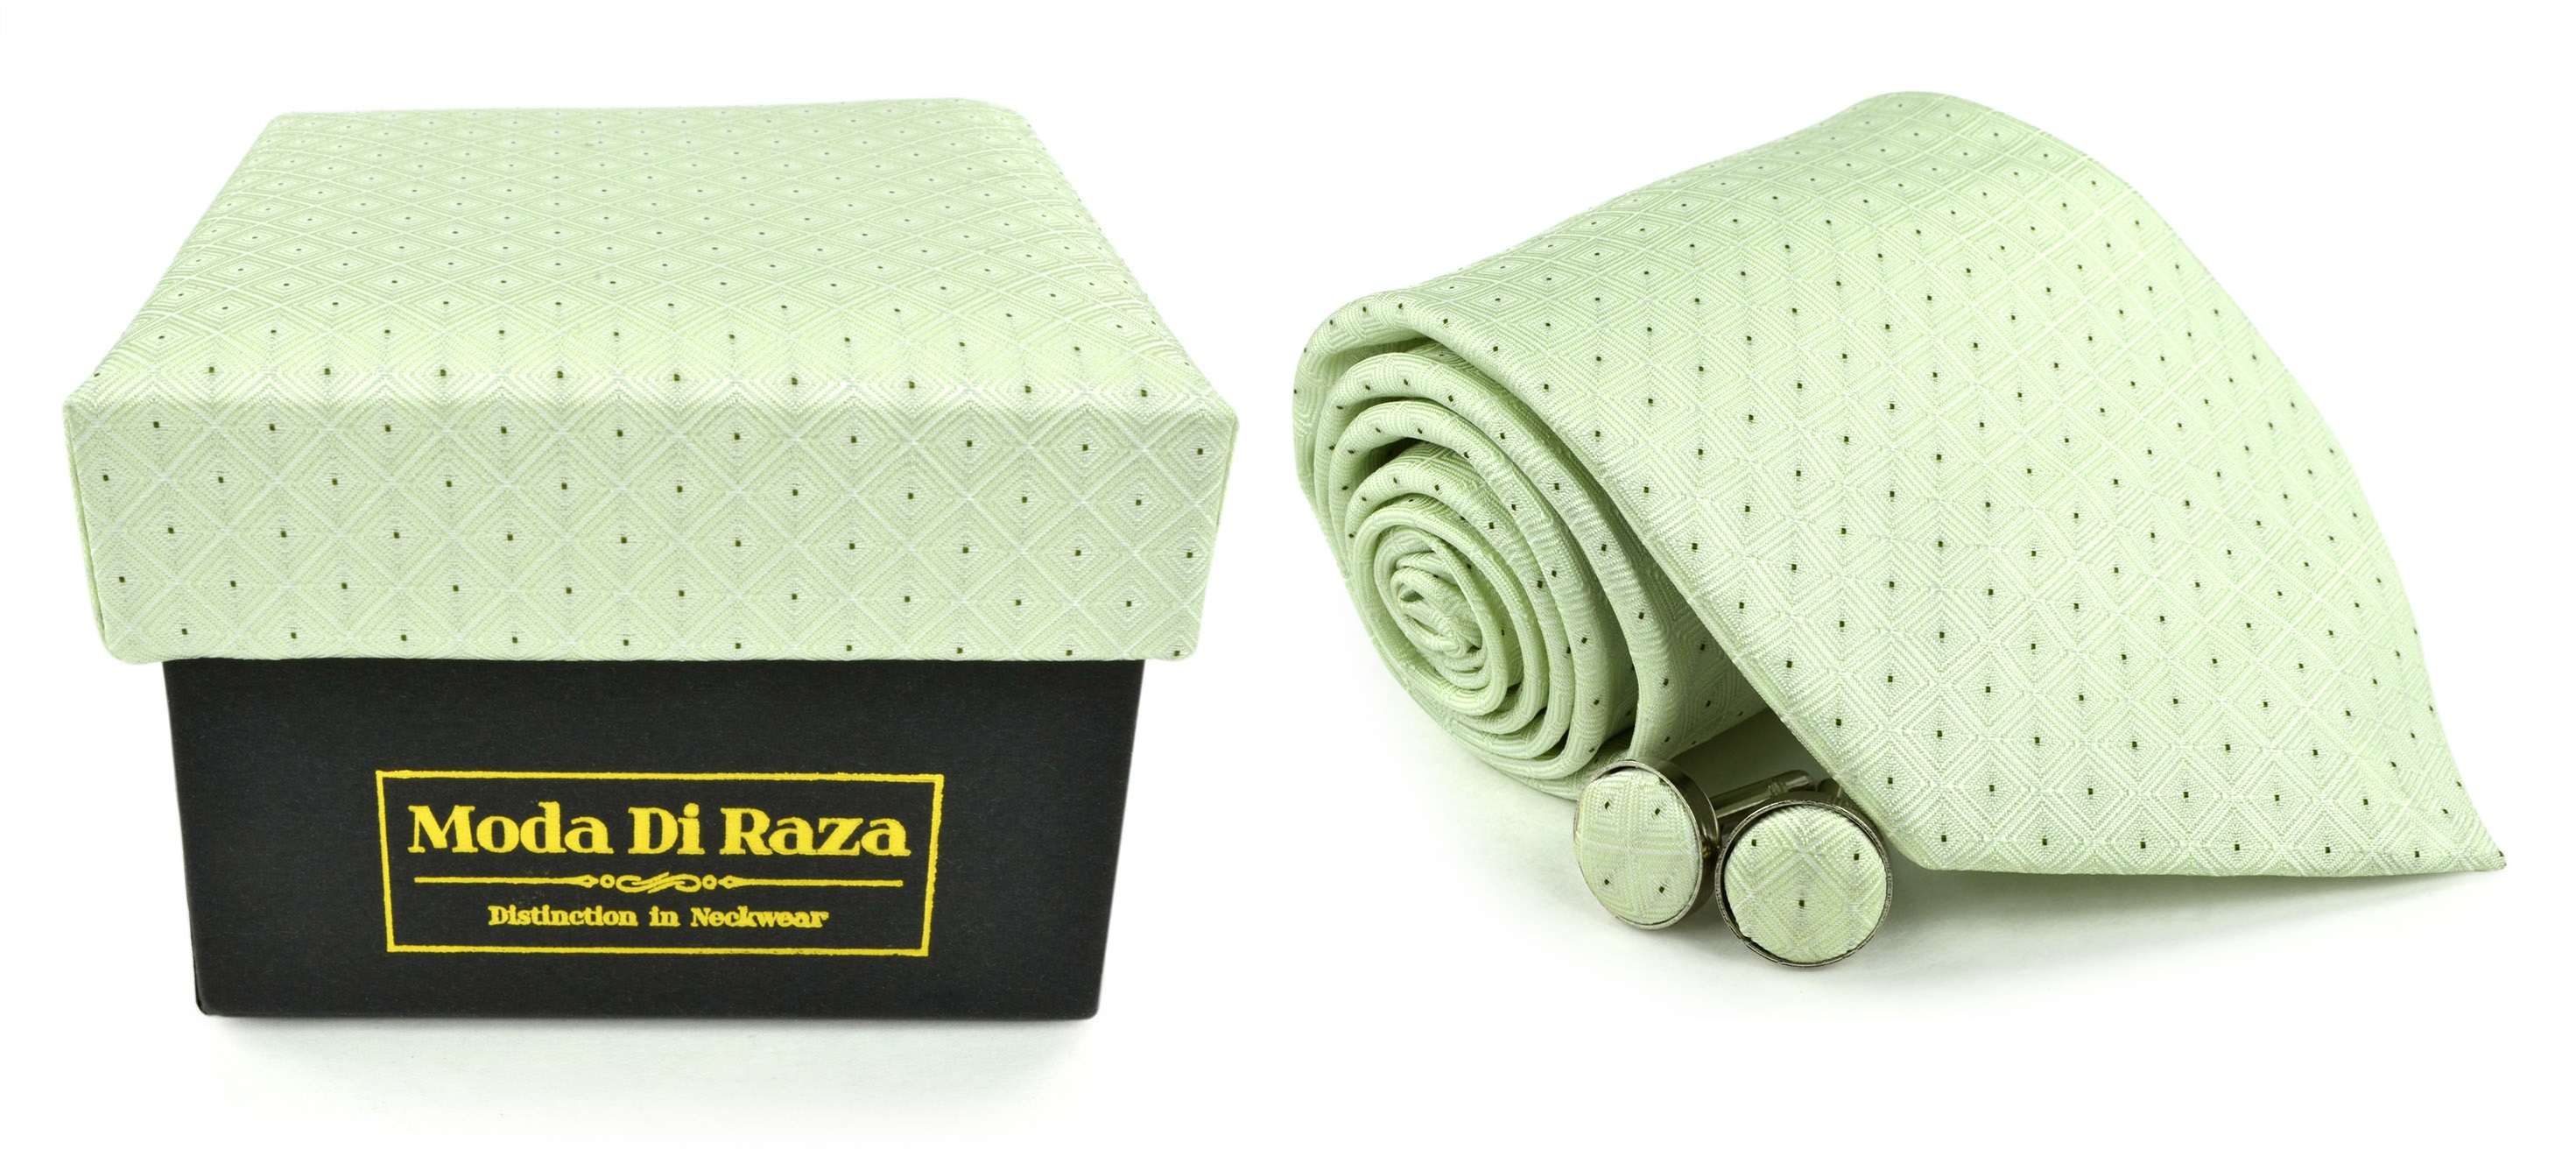 Moda Di Raza Men's NeckTie 3.0 With Cufflink n Gift Box For Formal Events - Light Mint